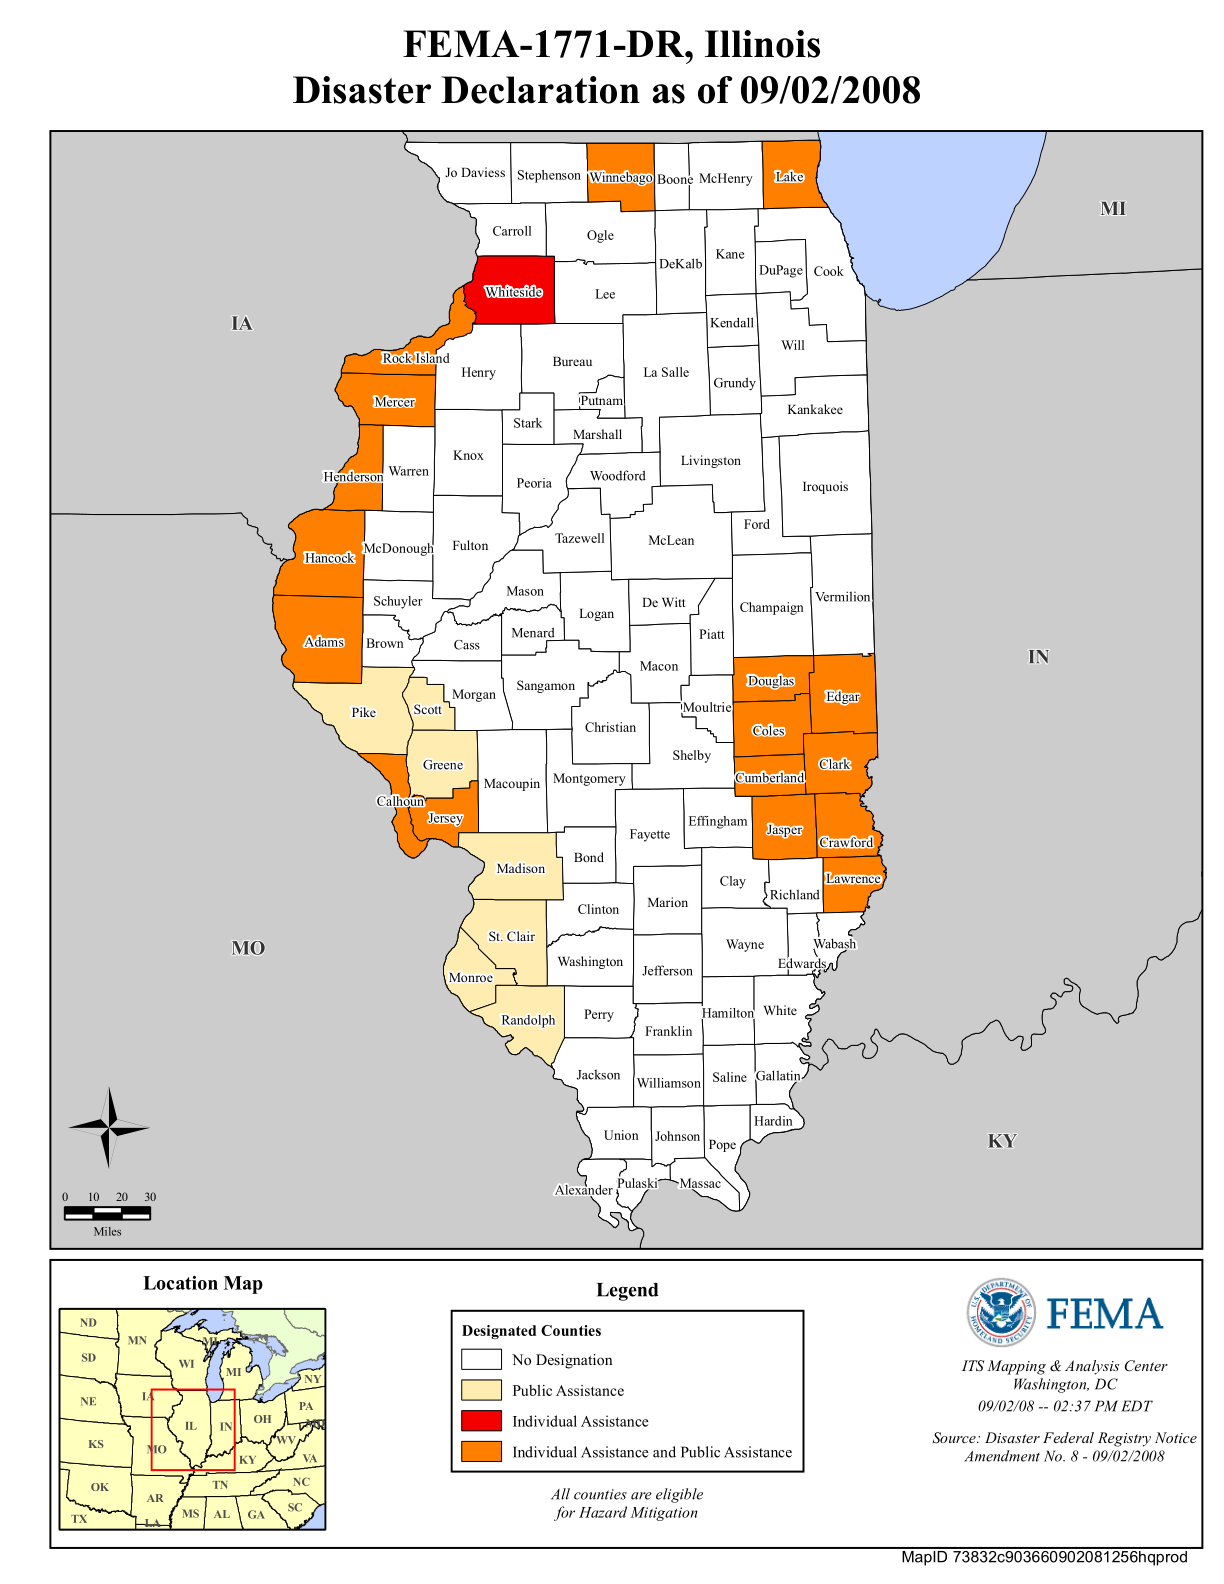 Illinois Severe Storms and Flooding (DR1771) FEMA.gov